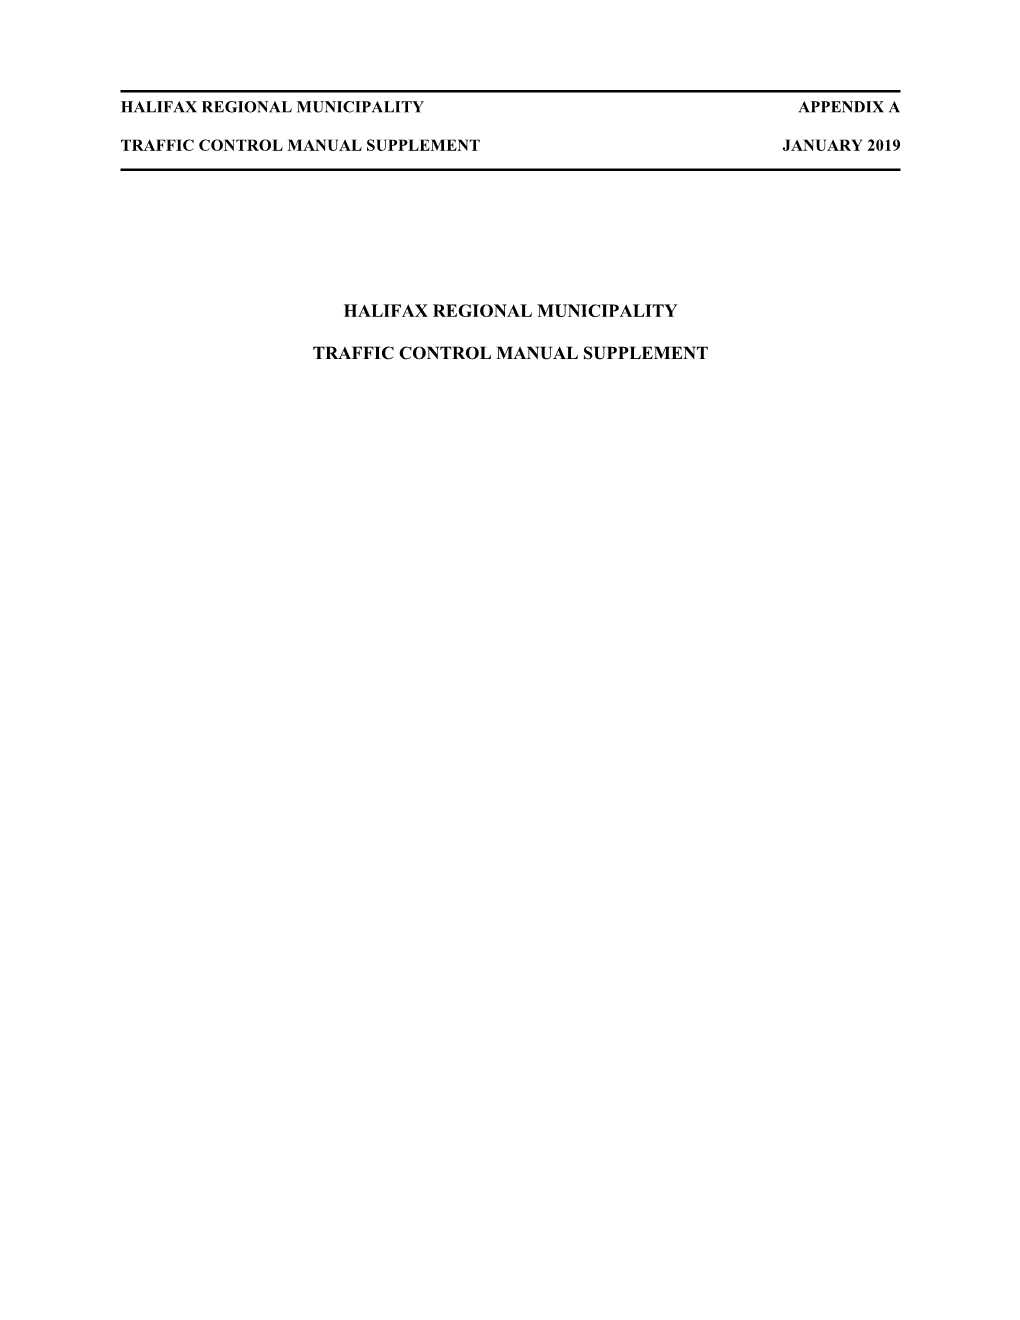 Halifax Regional Municipality Appendix a Traffic Control Manual Supplement